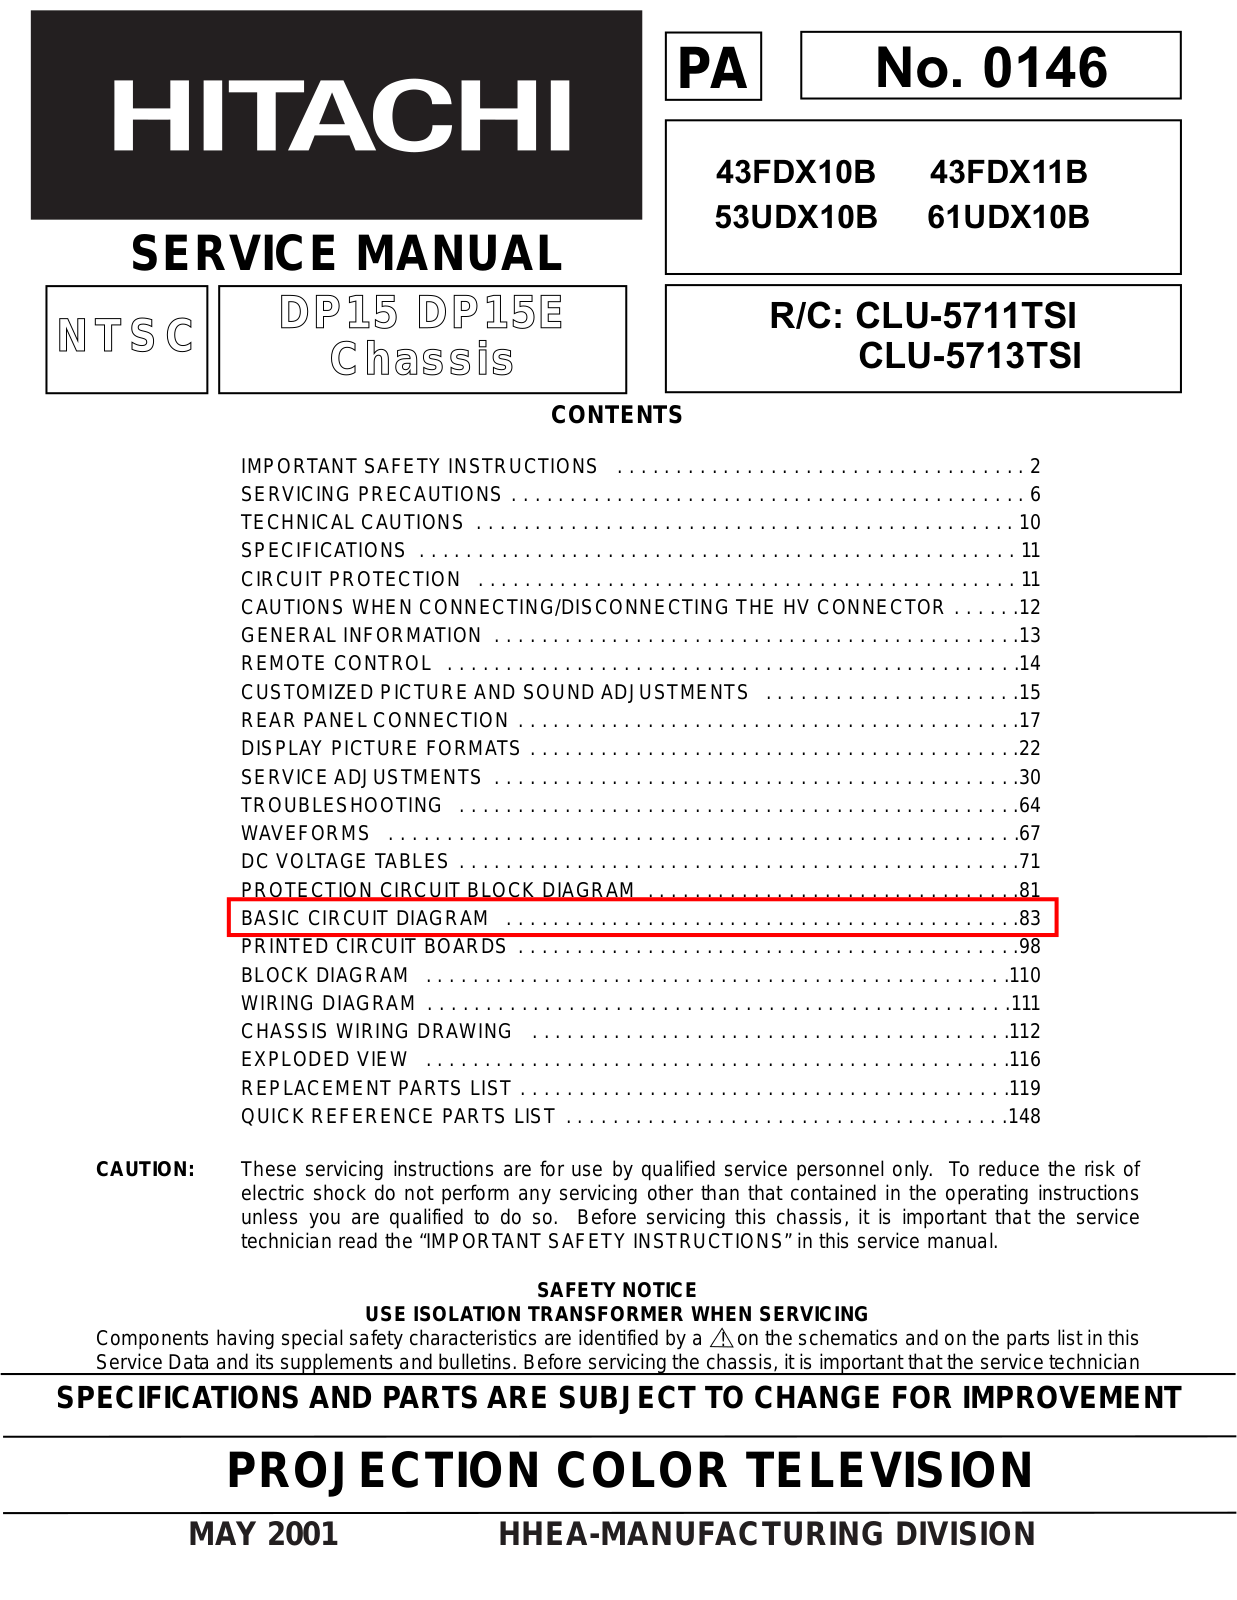 Hitachi PANO0146 Service Manual